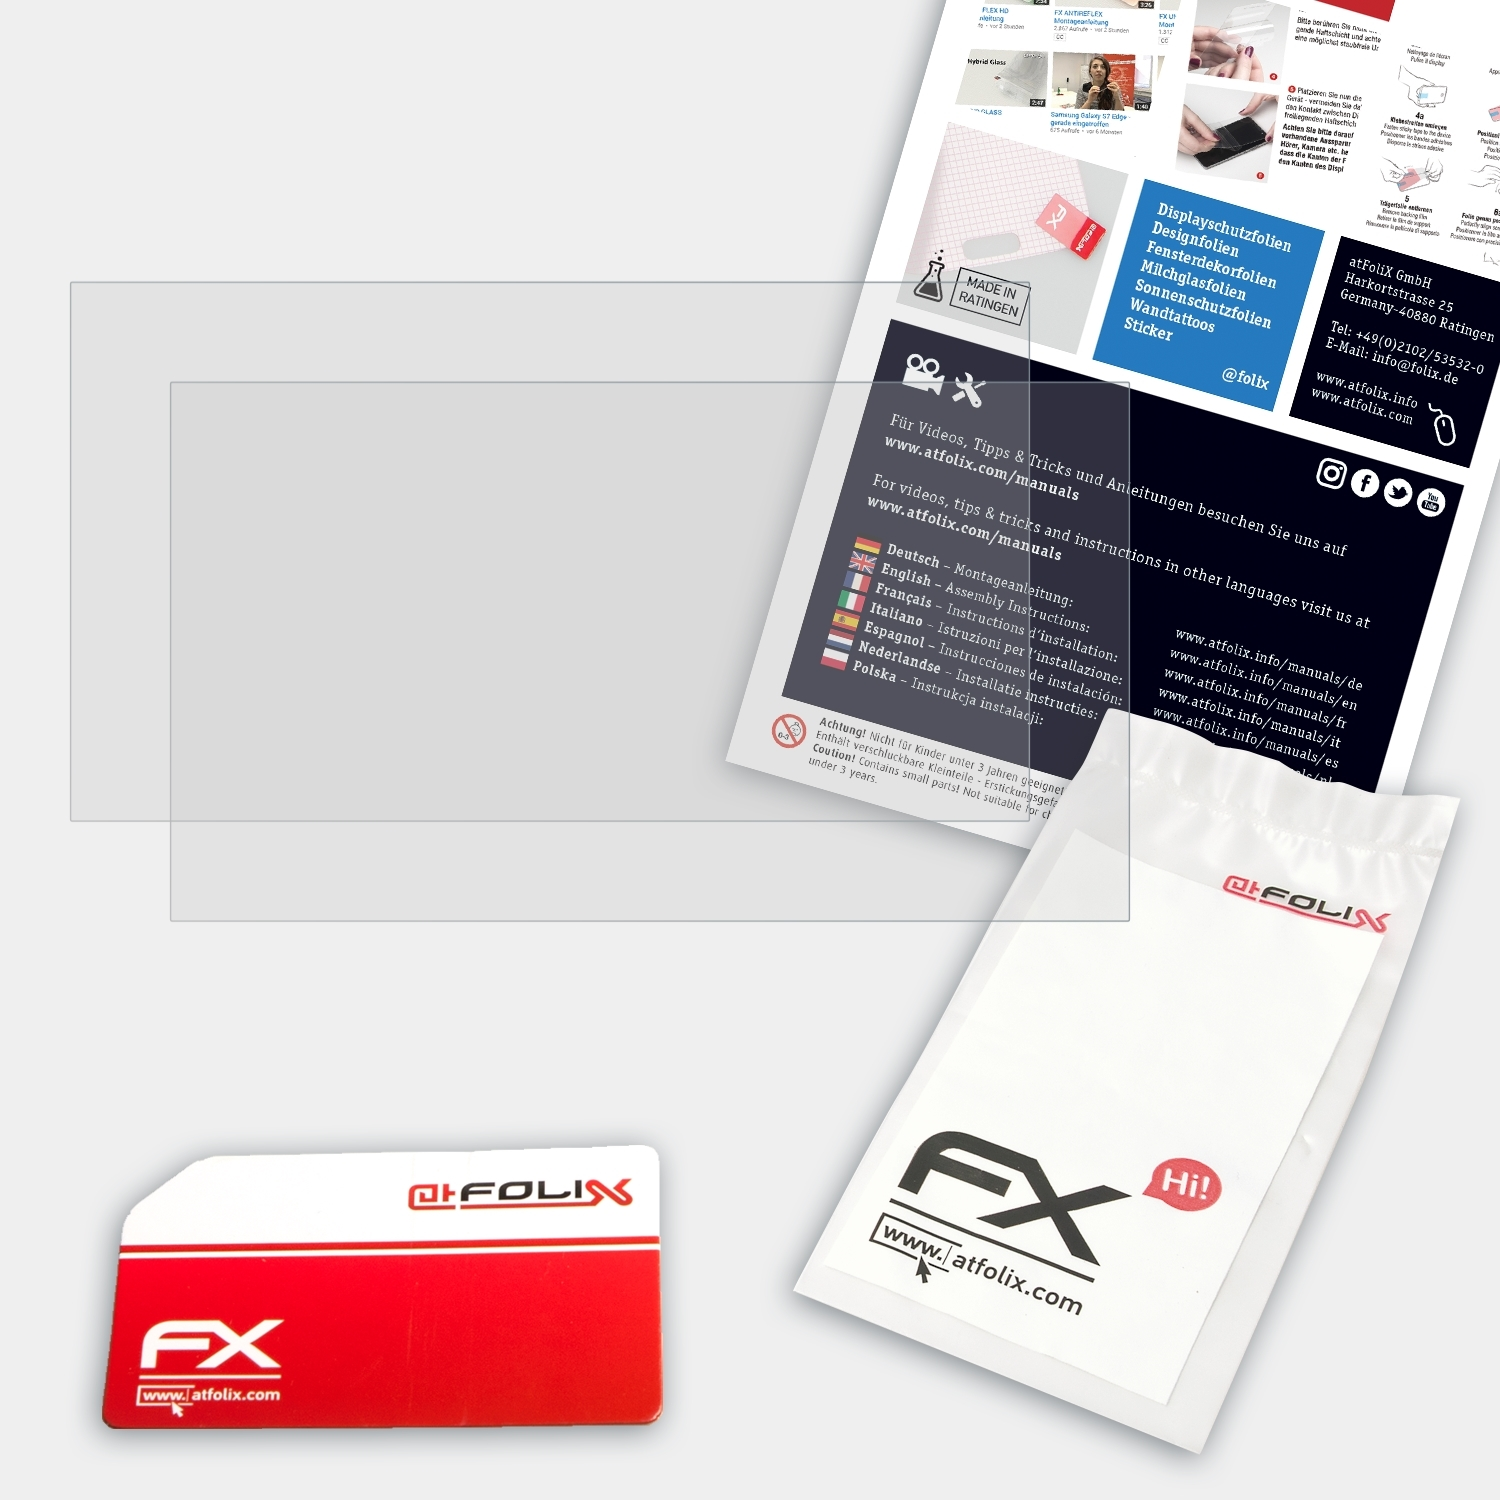 2x FX-Antireflex ATFOLIX Fujitsu U937) Lifebook Displayschutz(für